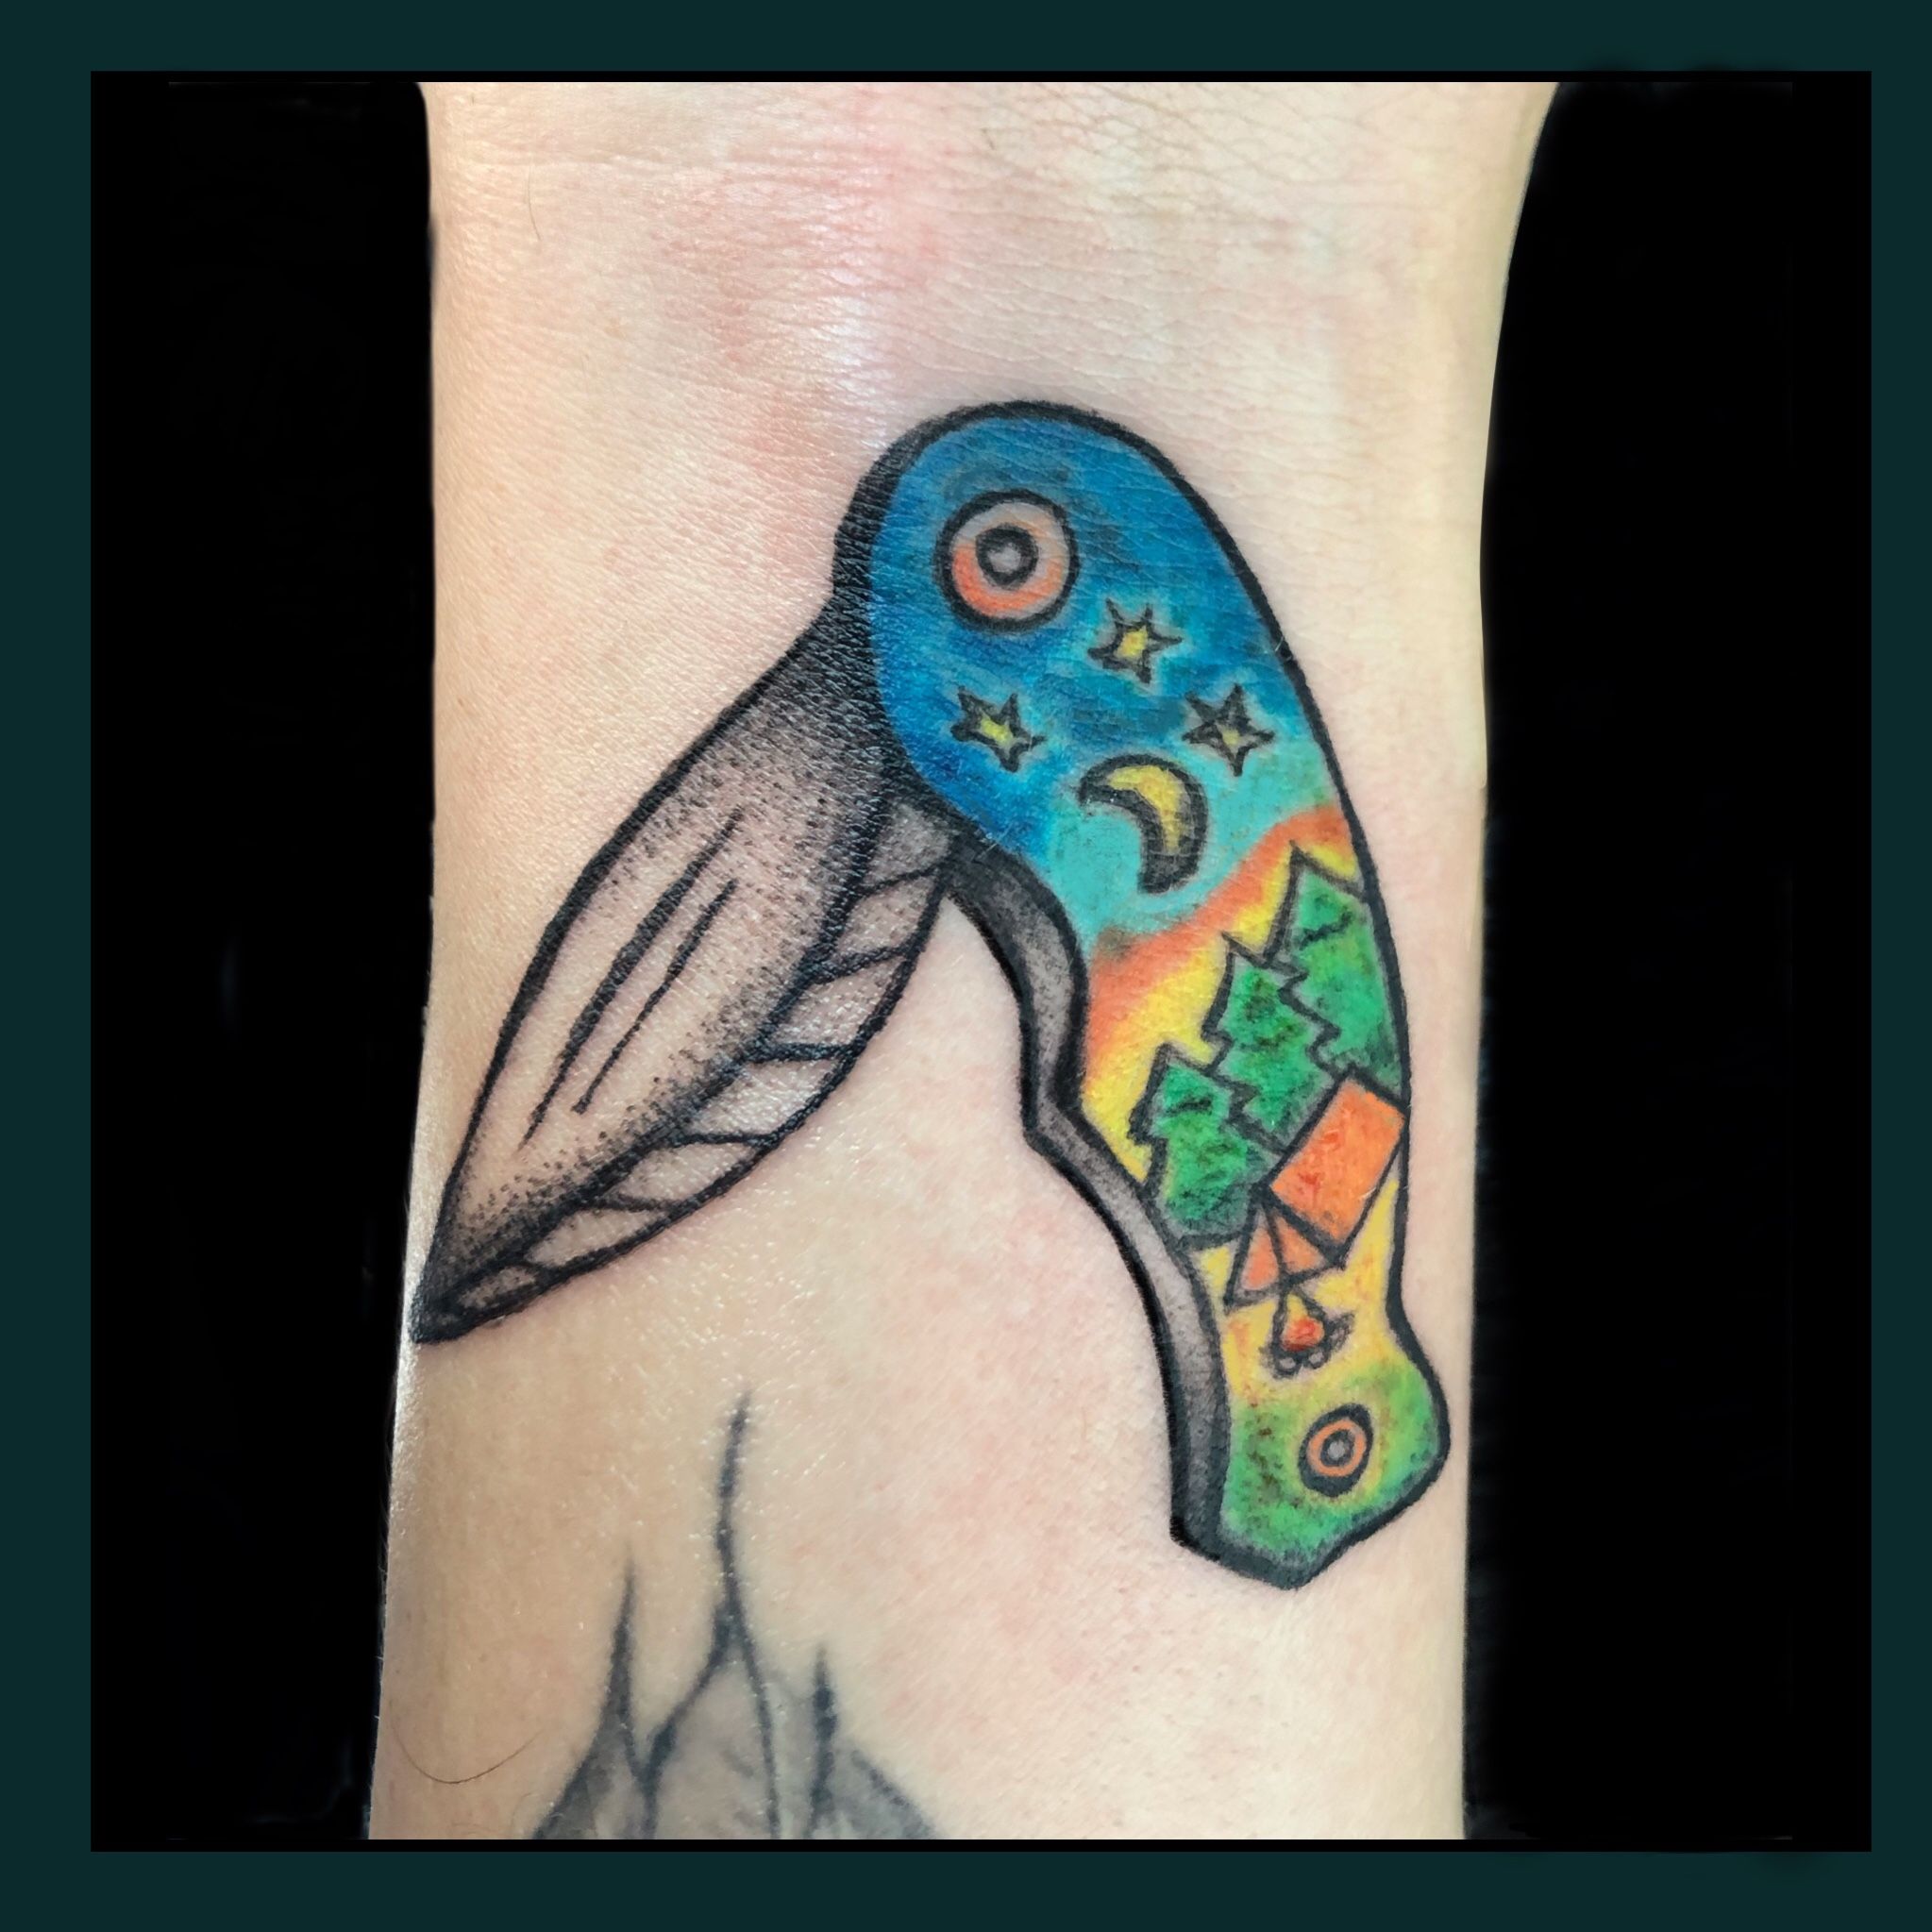 Tattoo uploaded by Robert Davies • Buck Knife Tattoo by Andy Perez  #buckknife #knifetattoo #traditionalknifetattoo #traditionaltattoo  #AndyPerez • Tattoodo